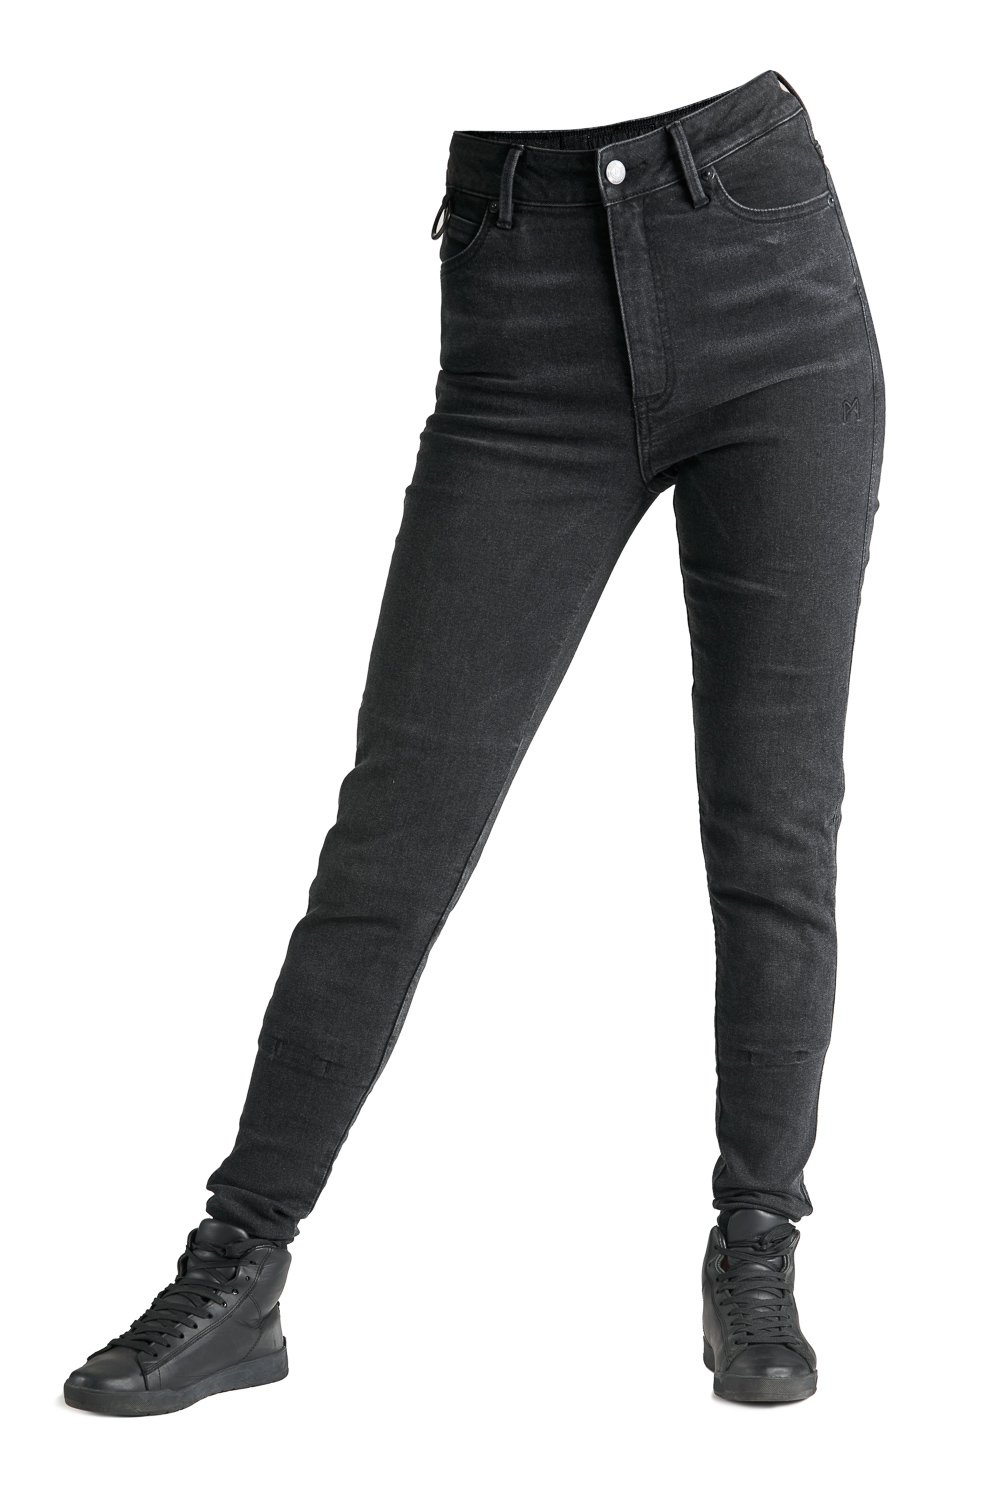 Image of Pando Moto Kusari Cor 01 Women Motorcycle Jeans Skinny-Fit Cordura Size W30/L34 EN